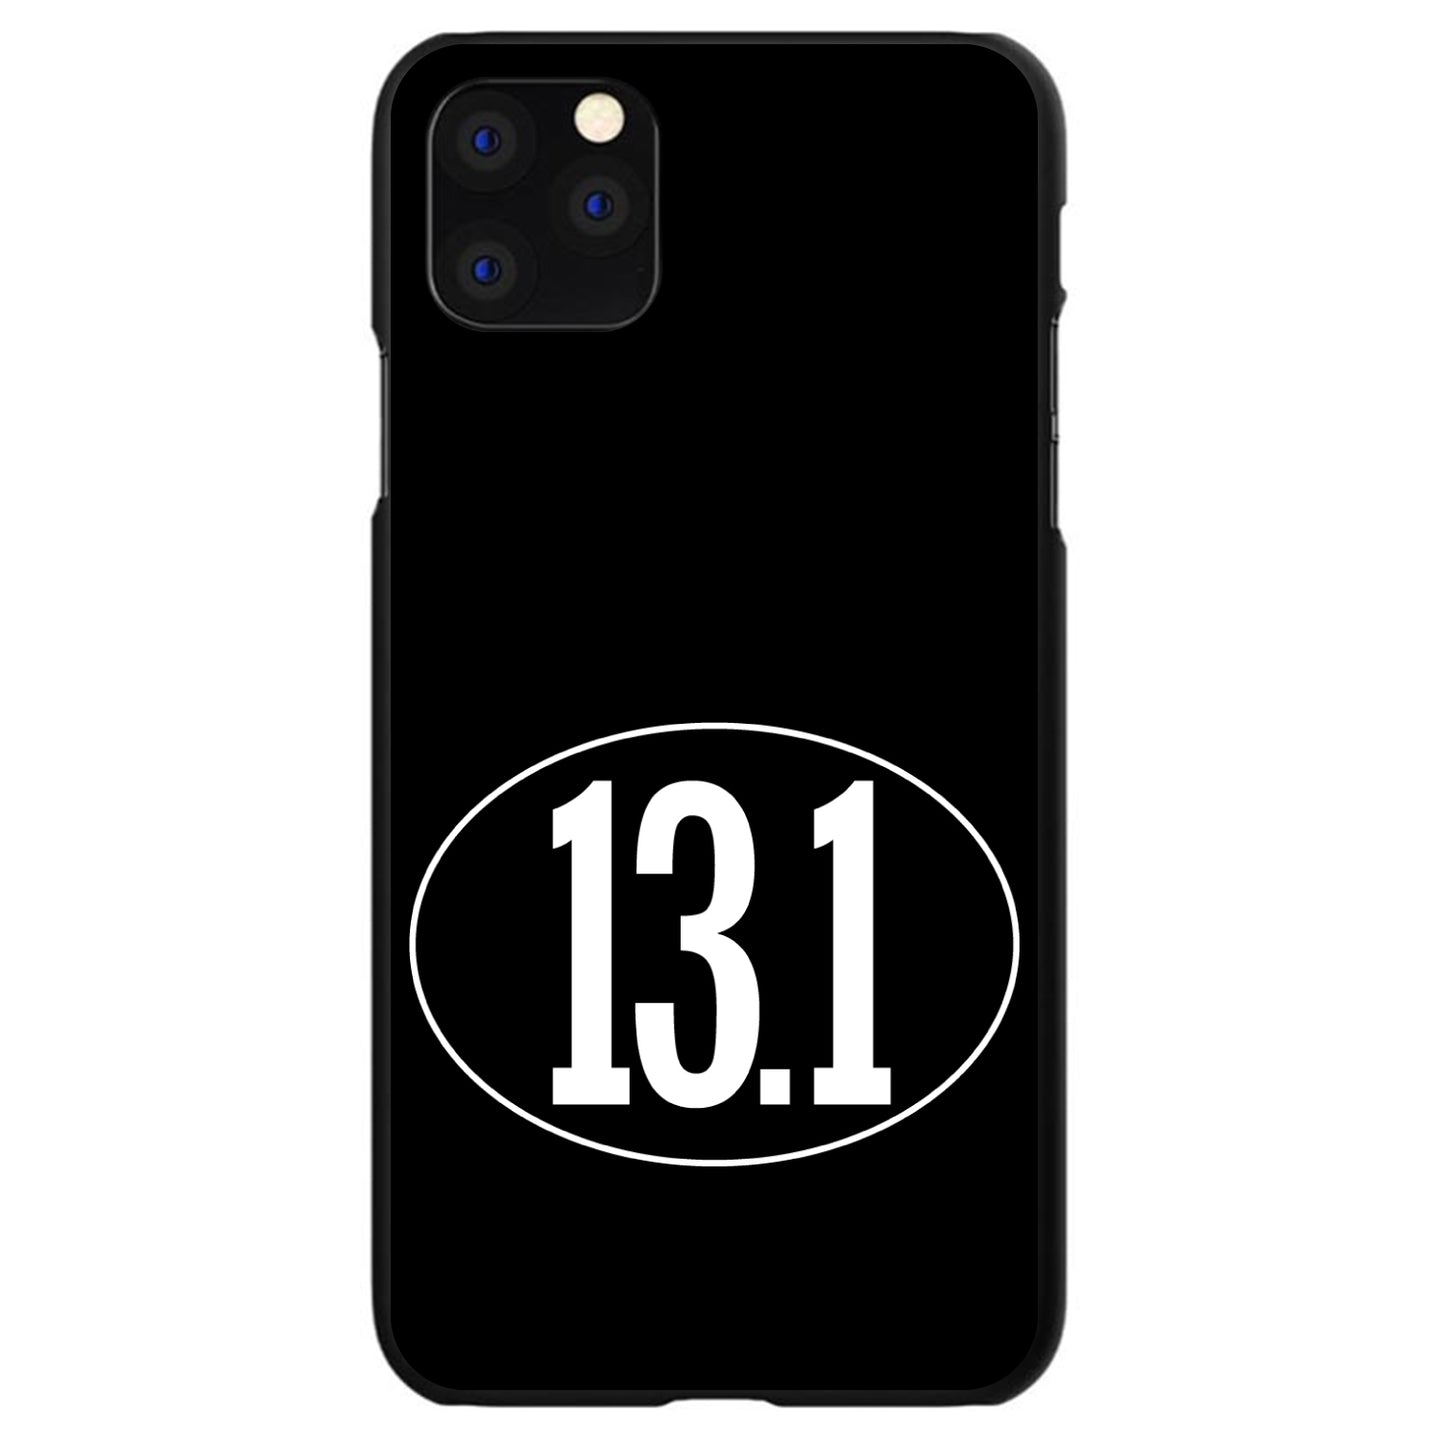 DistinctInk® Hard Plastic Snap-On Case for Apple iPhone or Samsung Galaxy - Black White 13.1 Half Marathon Run